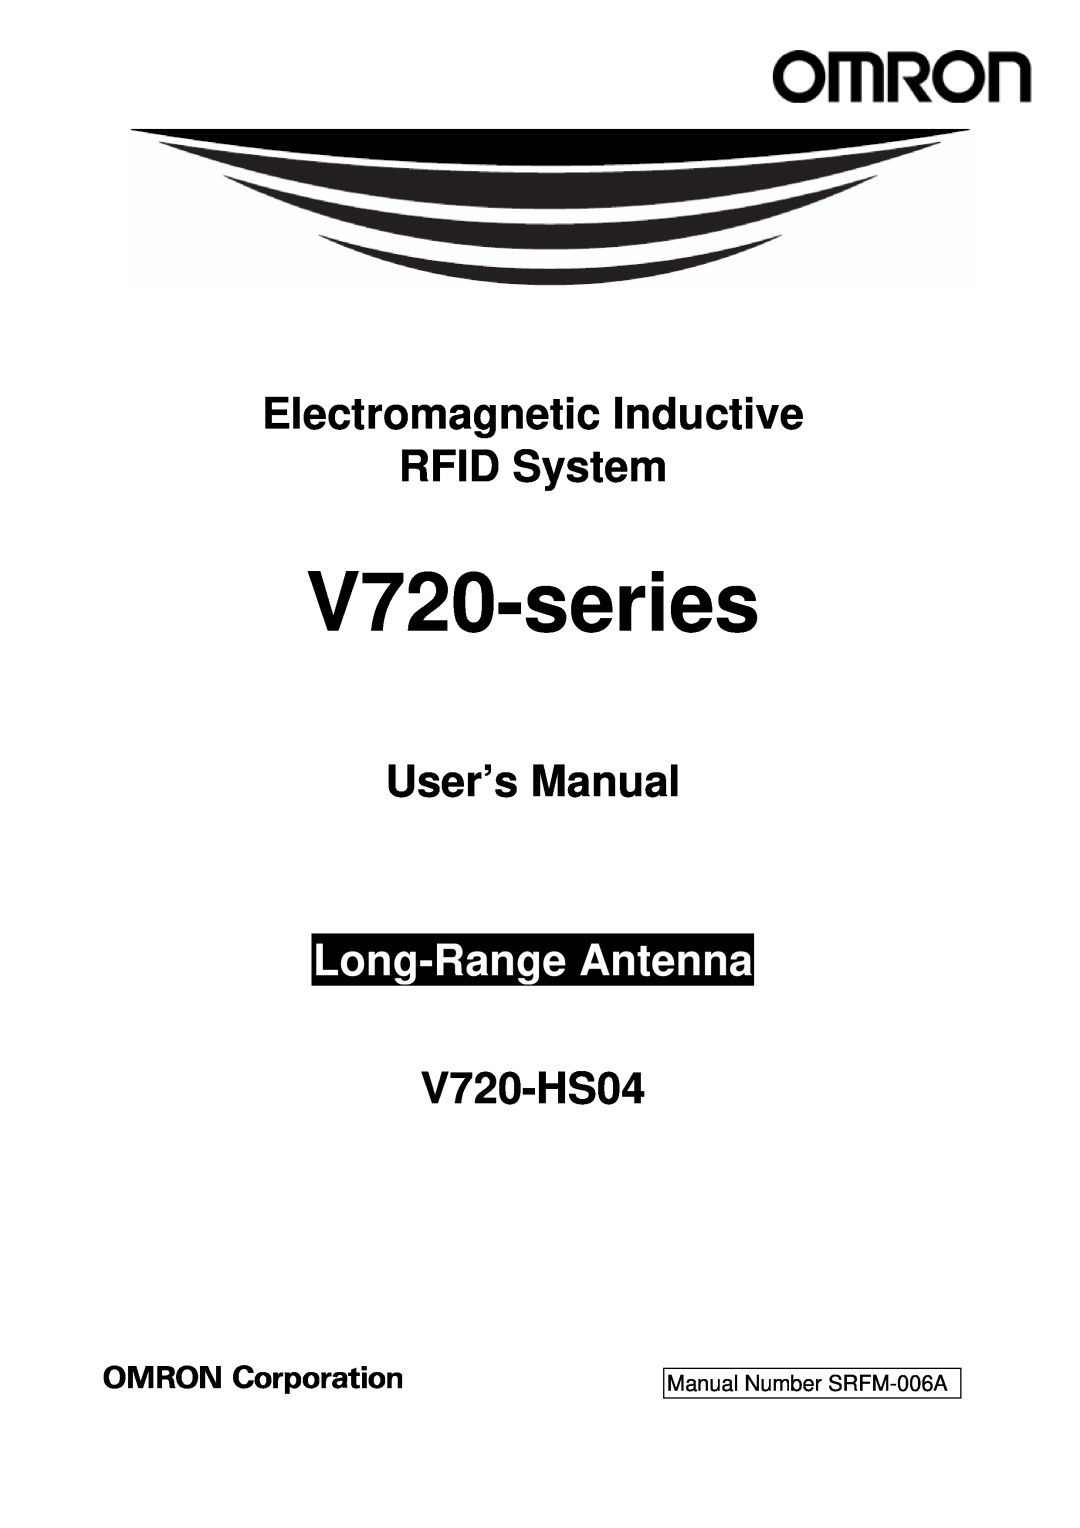 Omron V720-HS04 user manual V720-series, Electromagnetic Inductive RFID System, Long-RangeAntenna, Manual Number SRFM-006A 